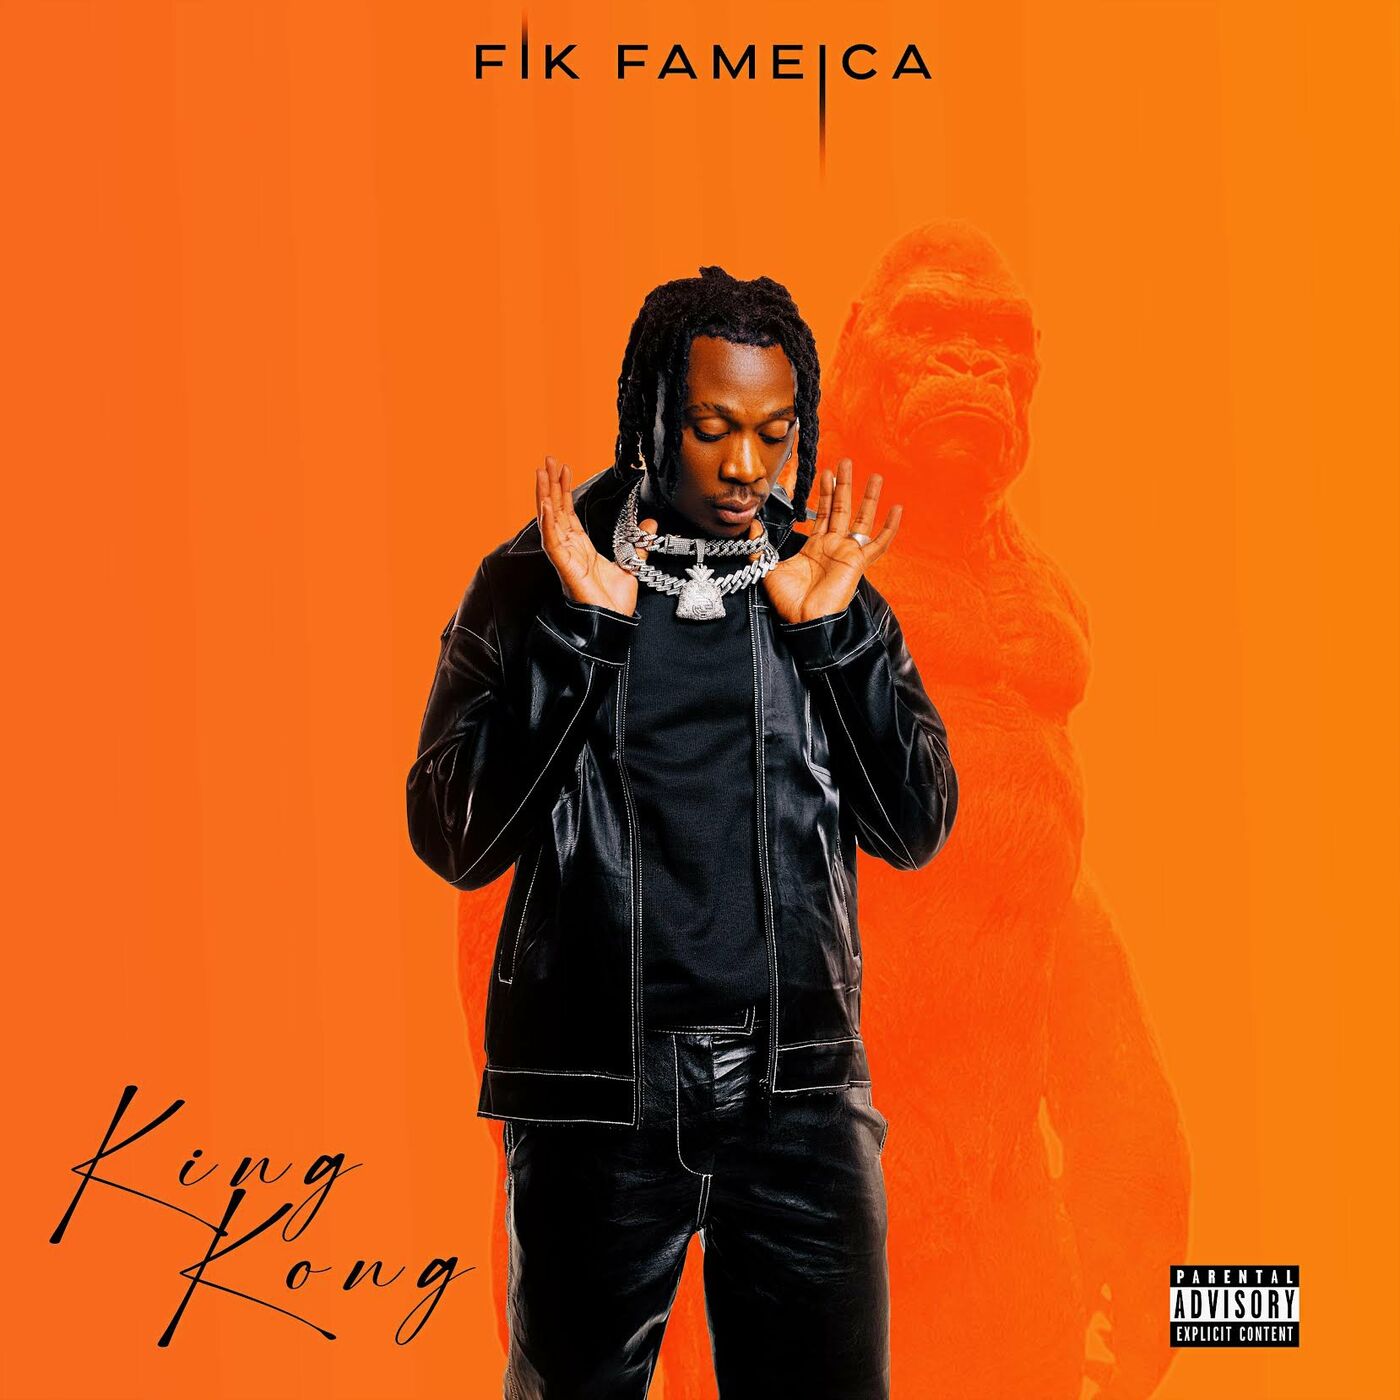 fik-fameica-sitoma-album-cover